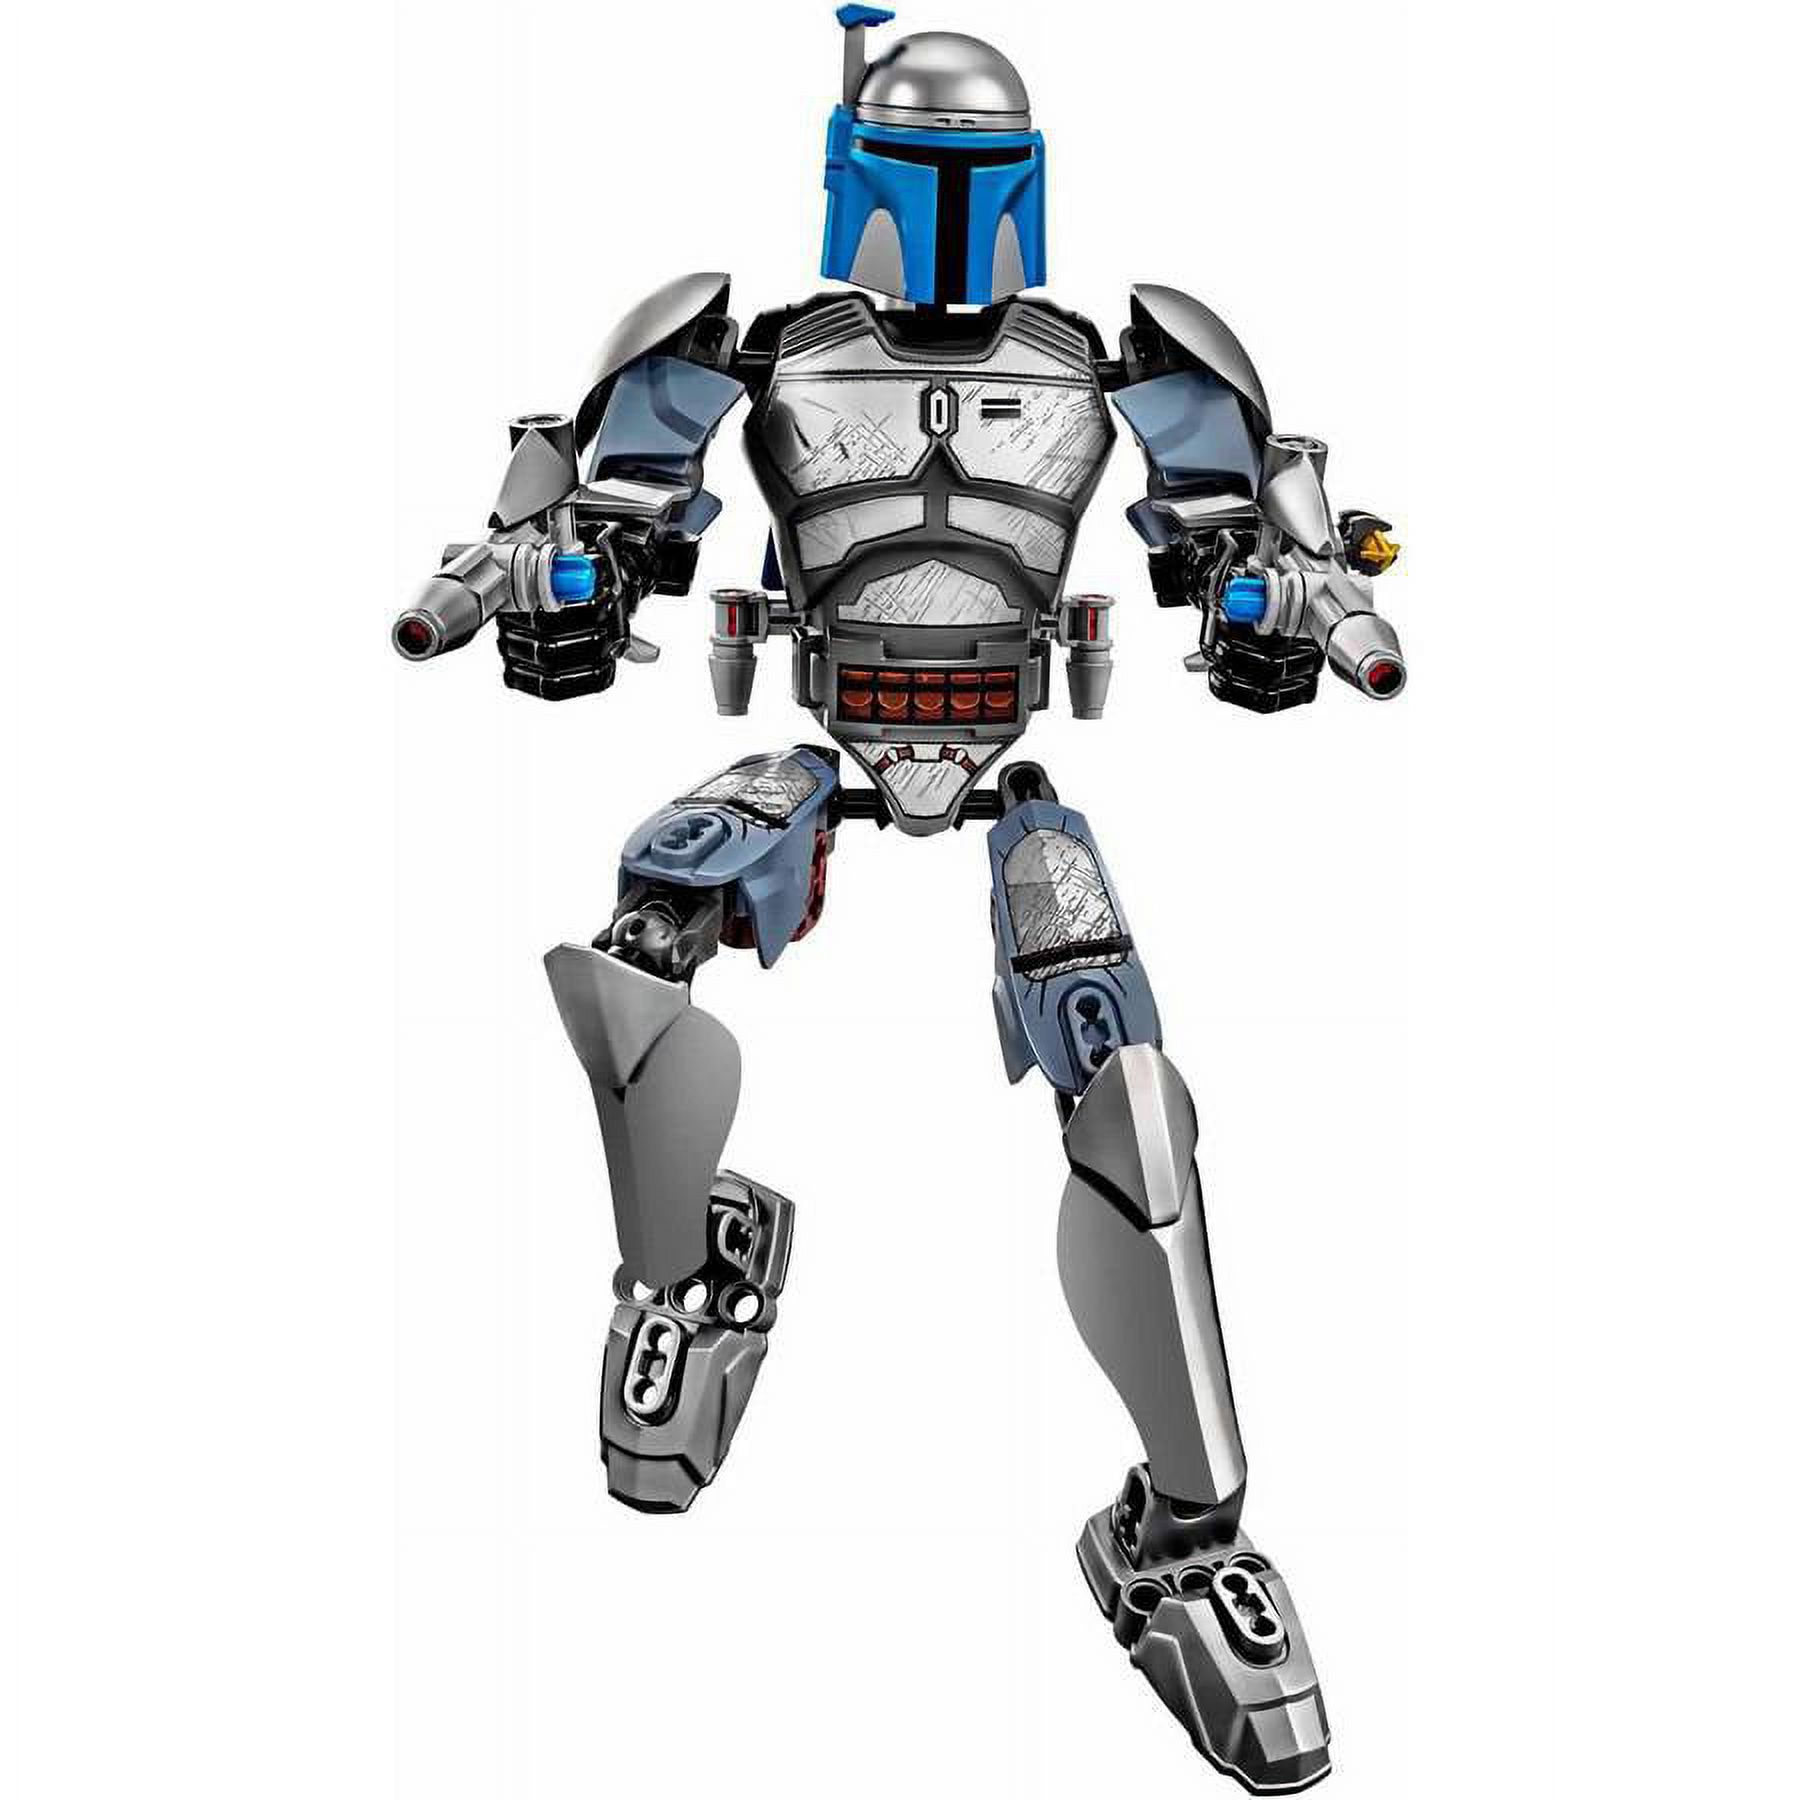 LEGO Star Wars 75107 Jango Fett Building Kit - image 4 of 5